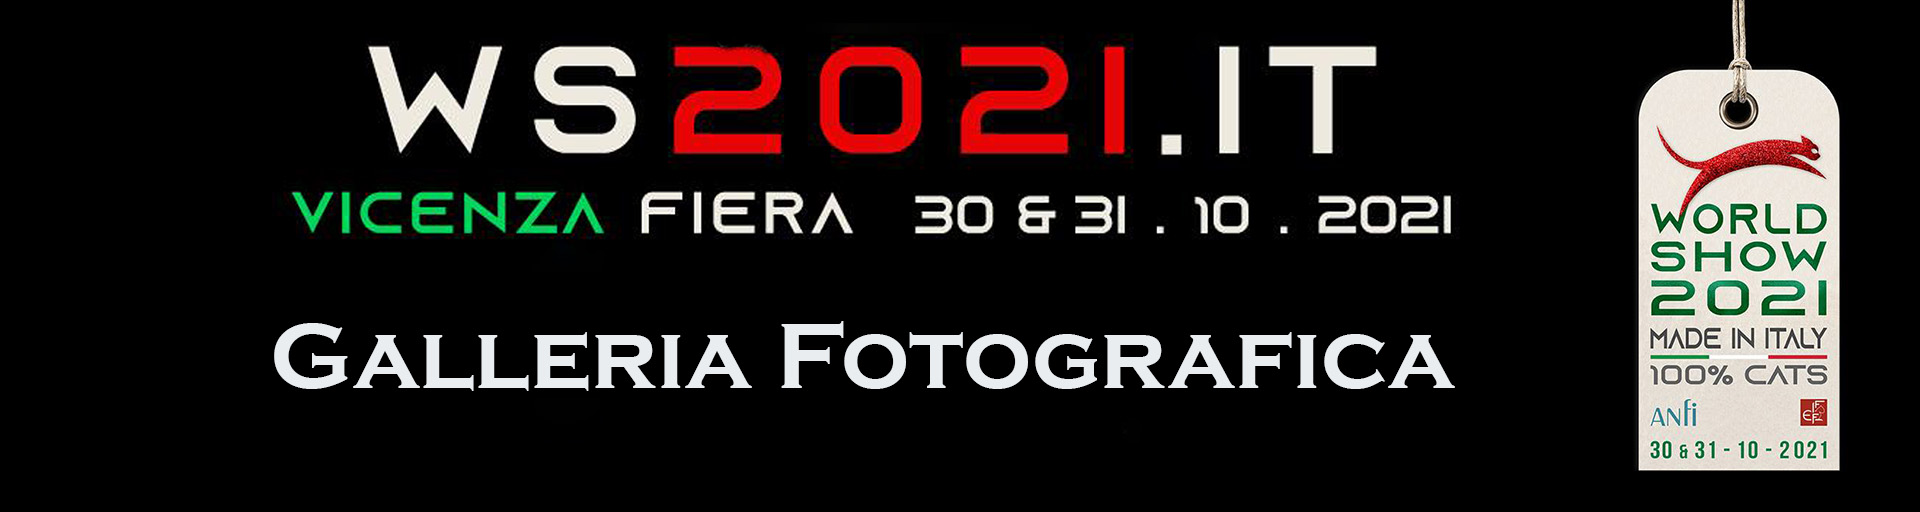 Word Show 2021 ANFI FIFe Vicenza 30-31 ottobre  2021